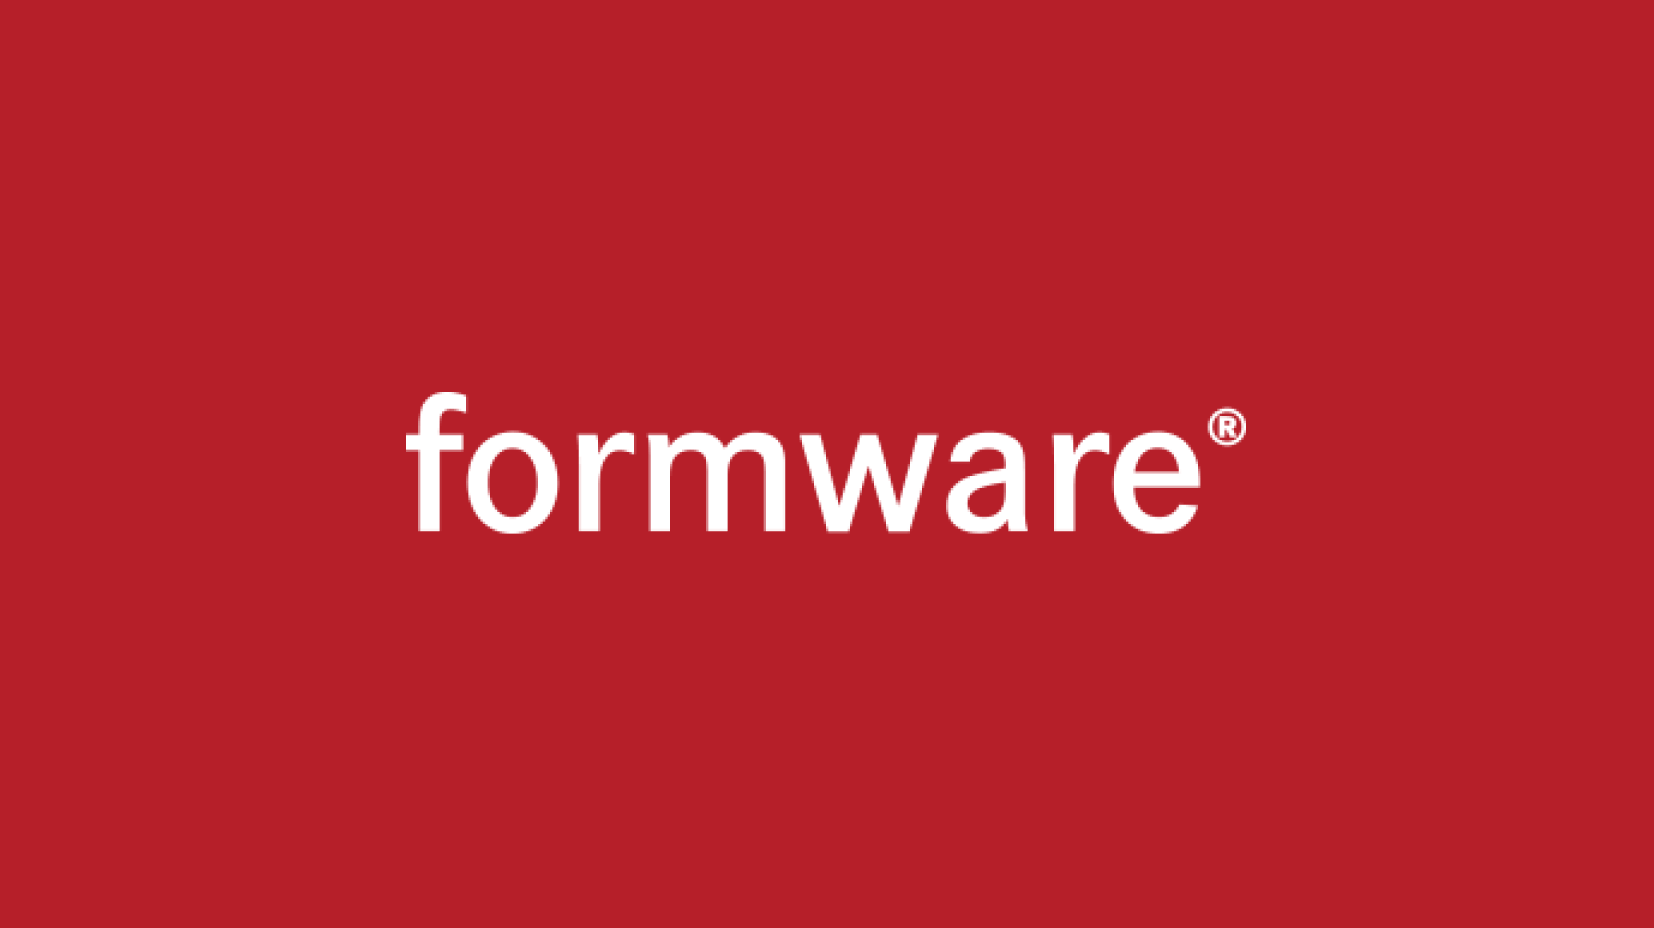 Tech & Product DD | Acquisition | Code & Co. advises Flex Capital on Formware